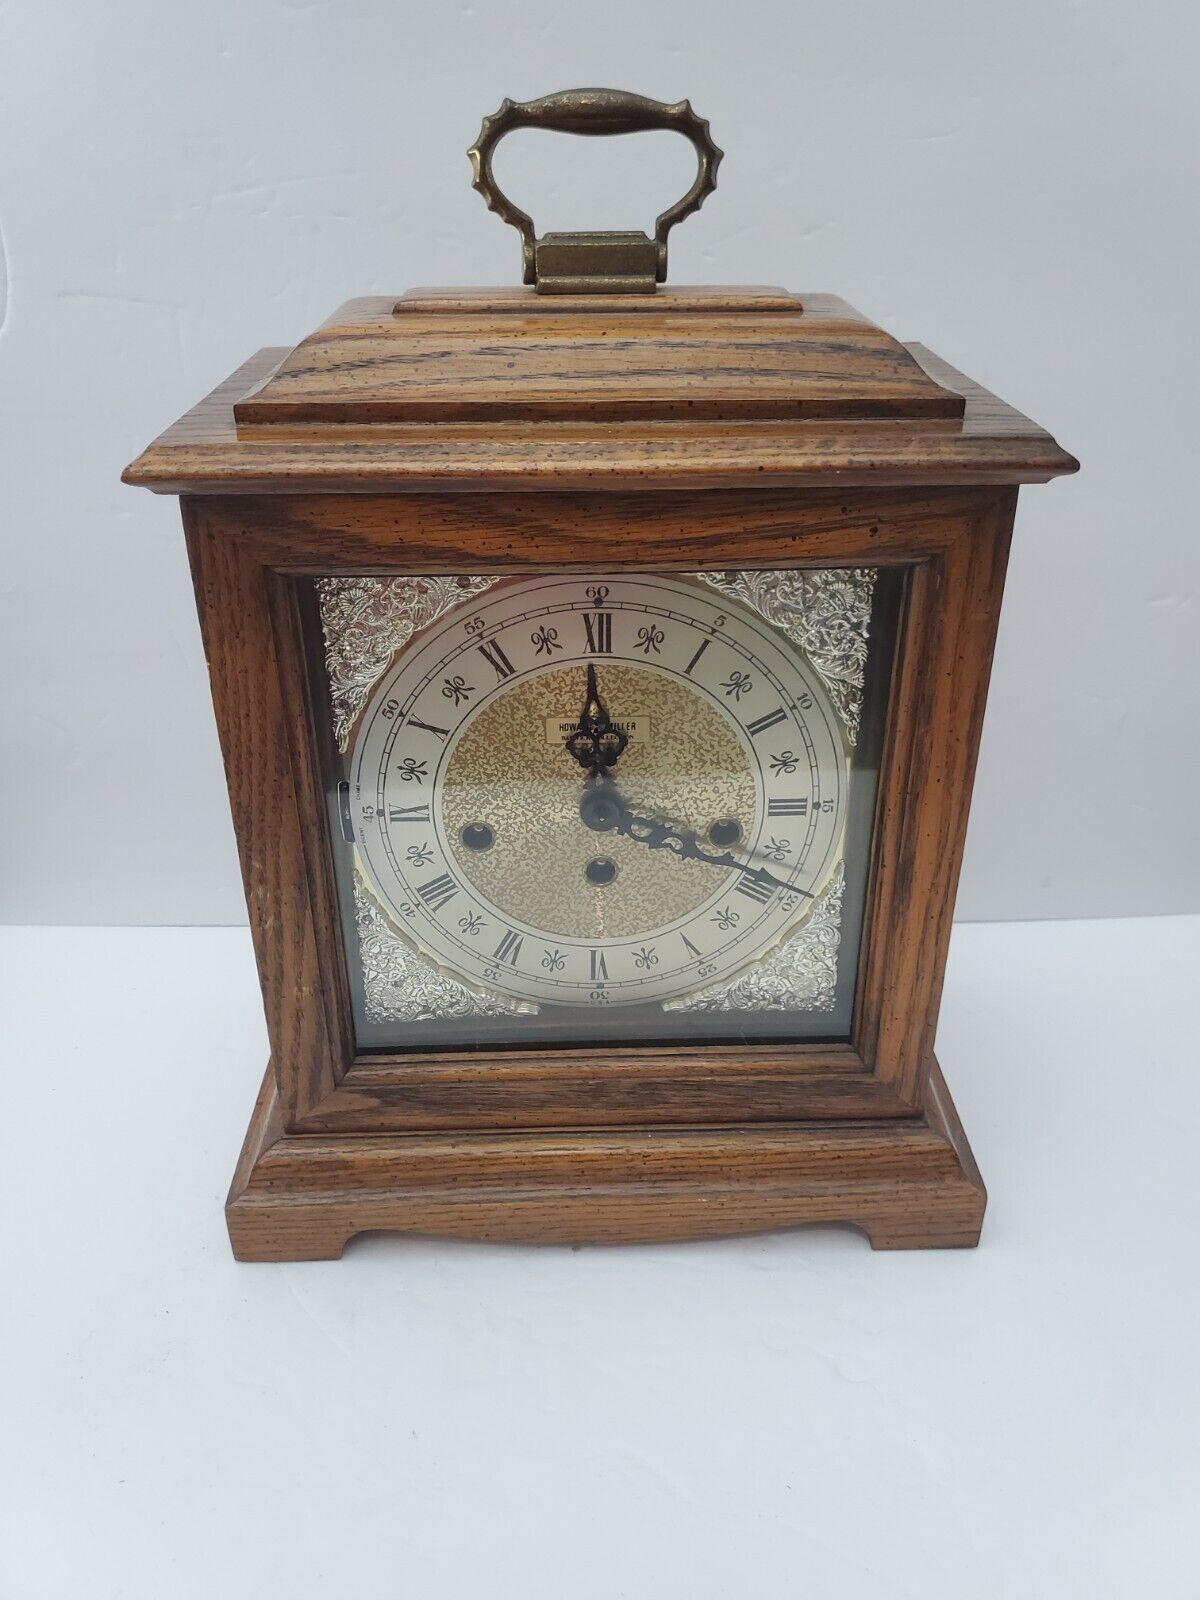 Vintage Howard Miller Model 660-406 Mantle Clock German Movement with Key